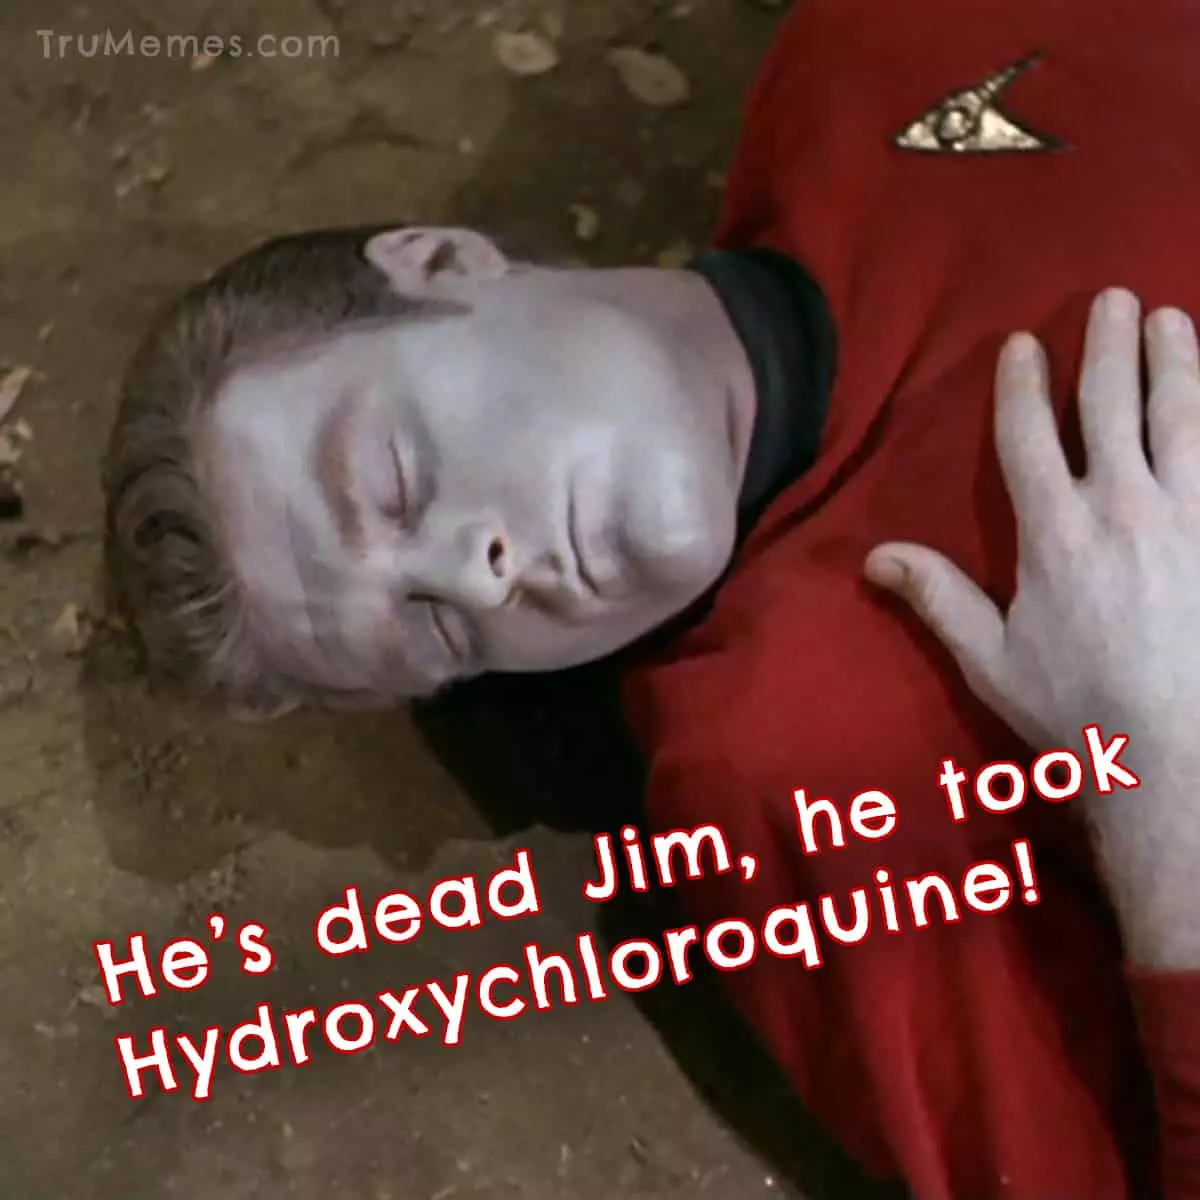 He's dead Jim, he took hydroxychloroquine-IG